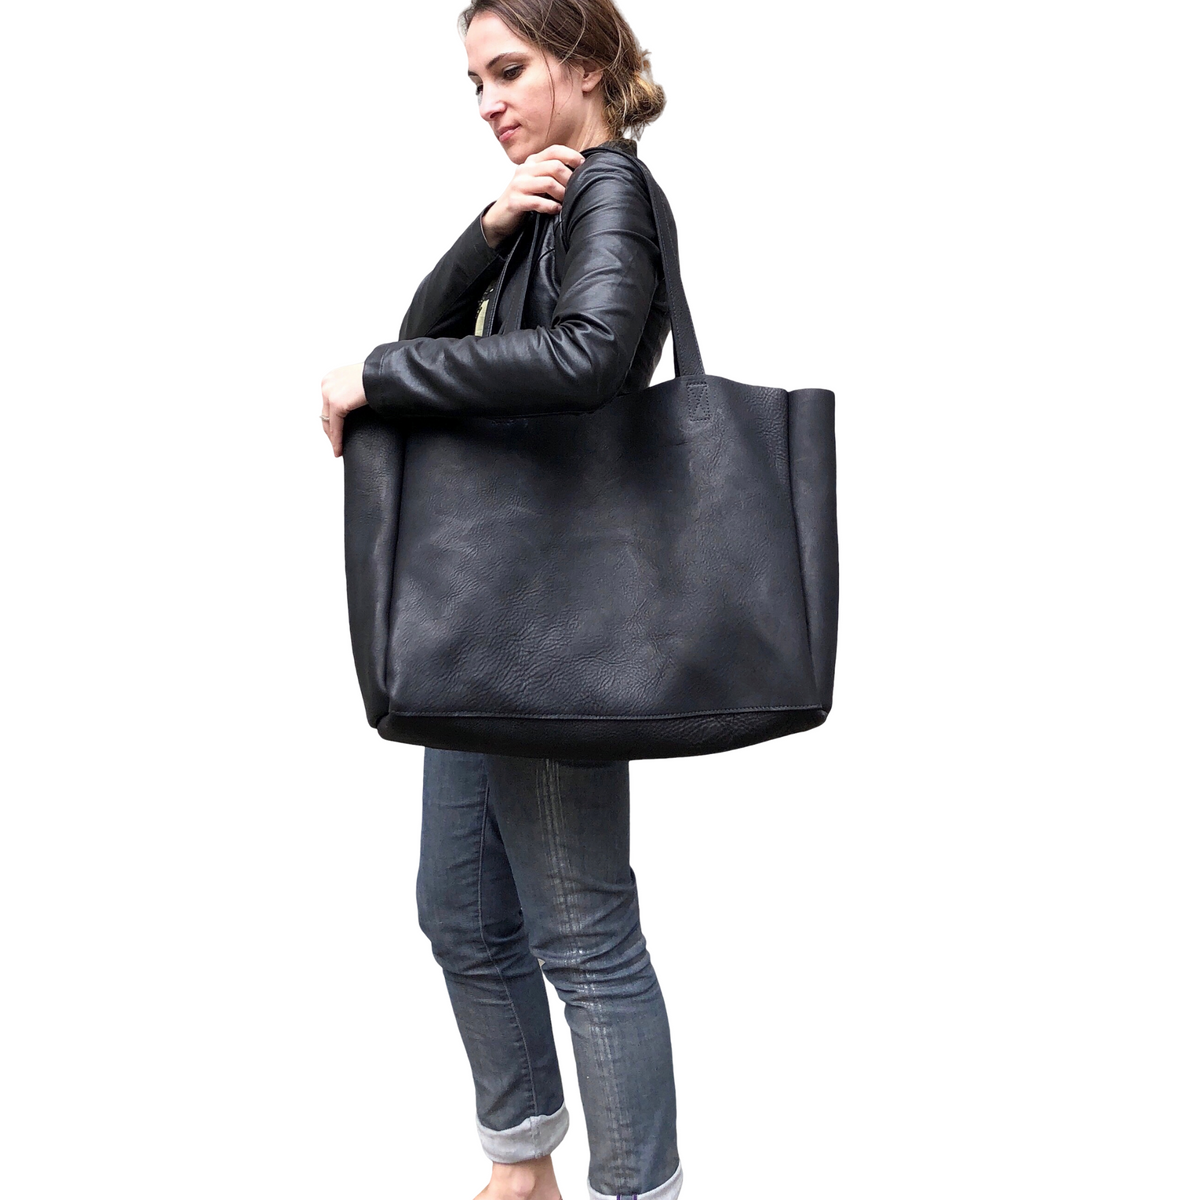 Black Leather Shopper, Large Tote Bag, Shopping Bag, Xxl Handbag